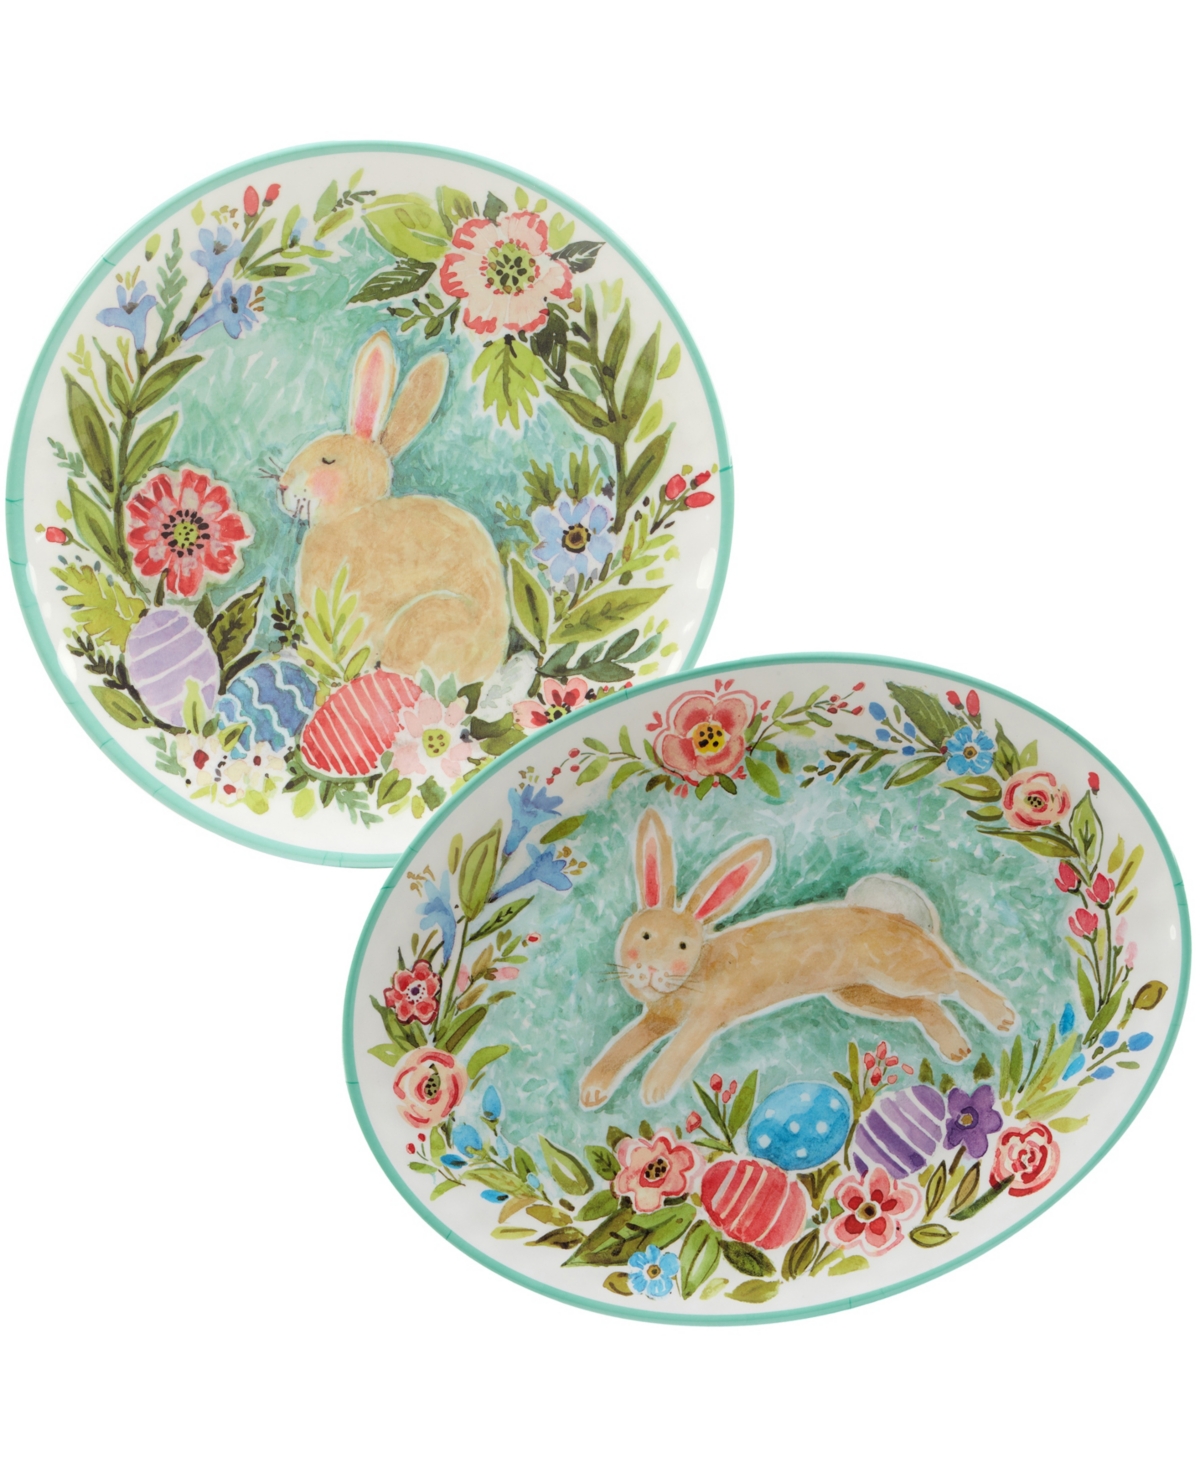 Certified International Joy Of Easter 2-pc Platter Set